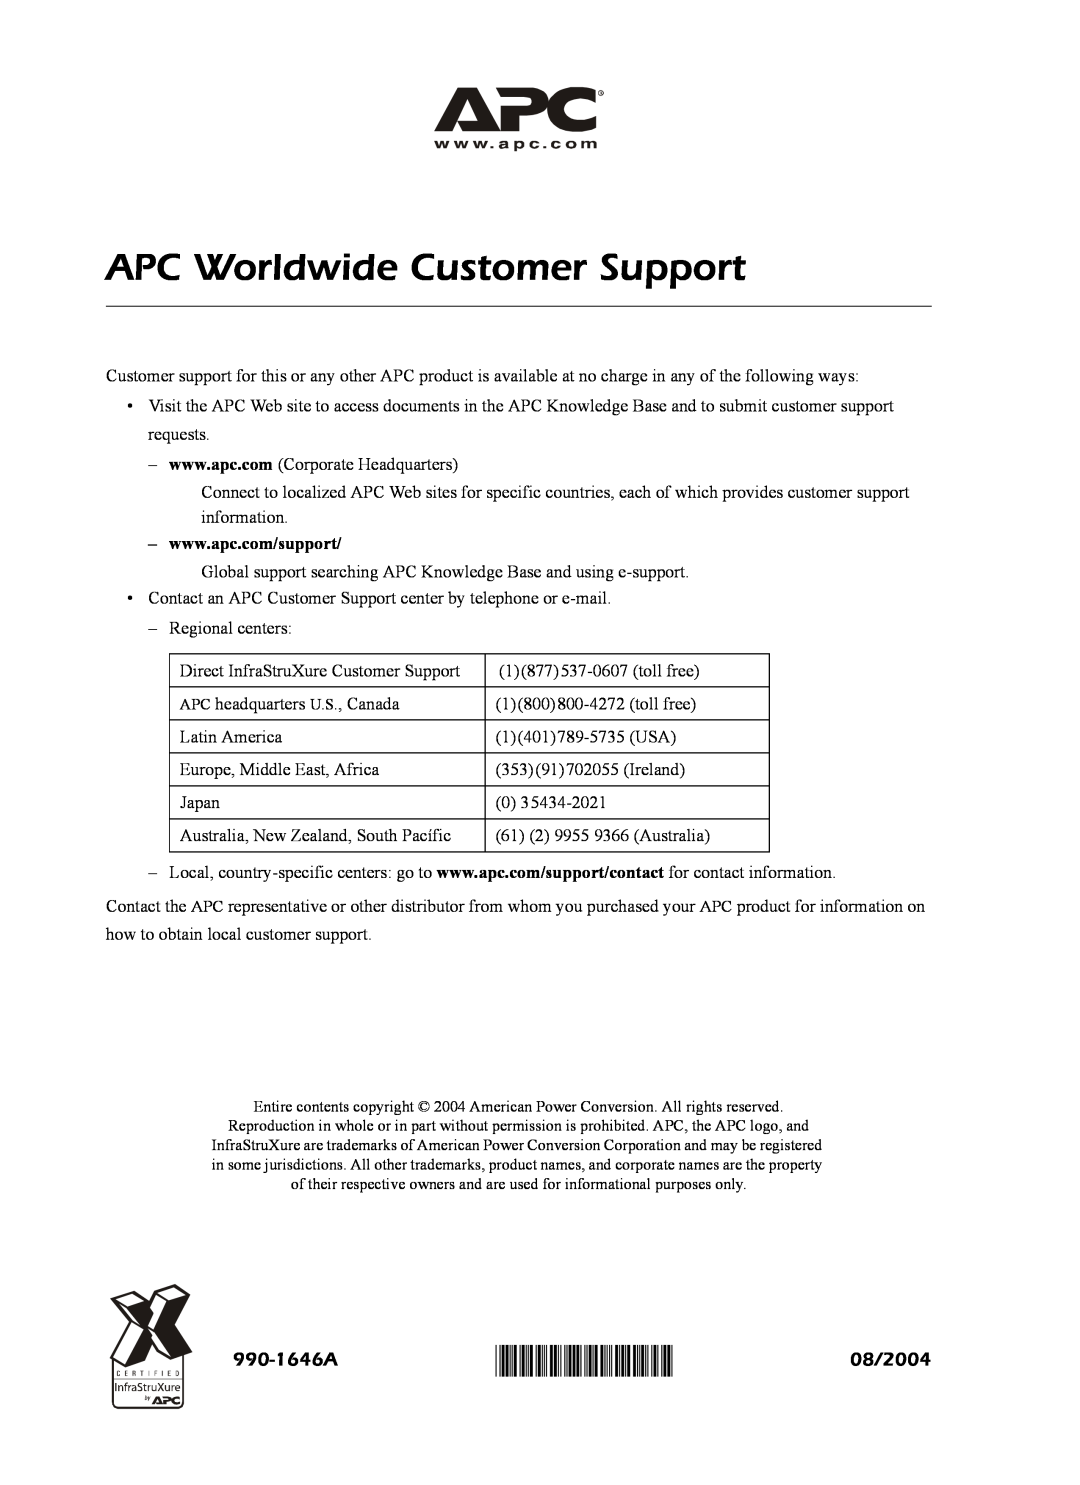 American Power Conversion PDU manual 990-1646A, 08/2004, APC Worldwide Customer Support 